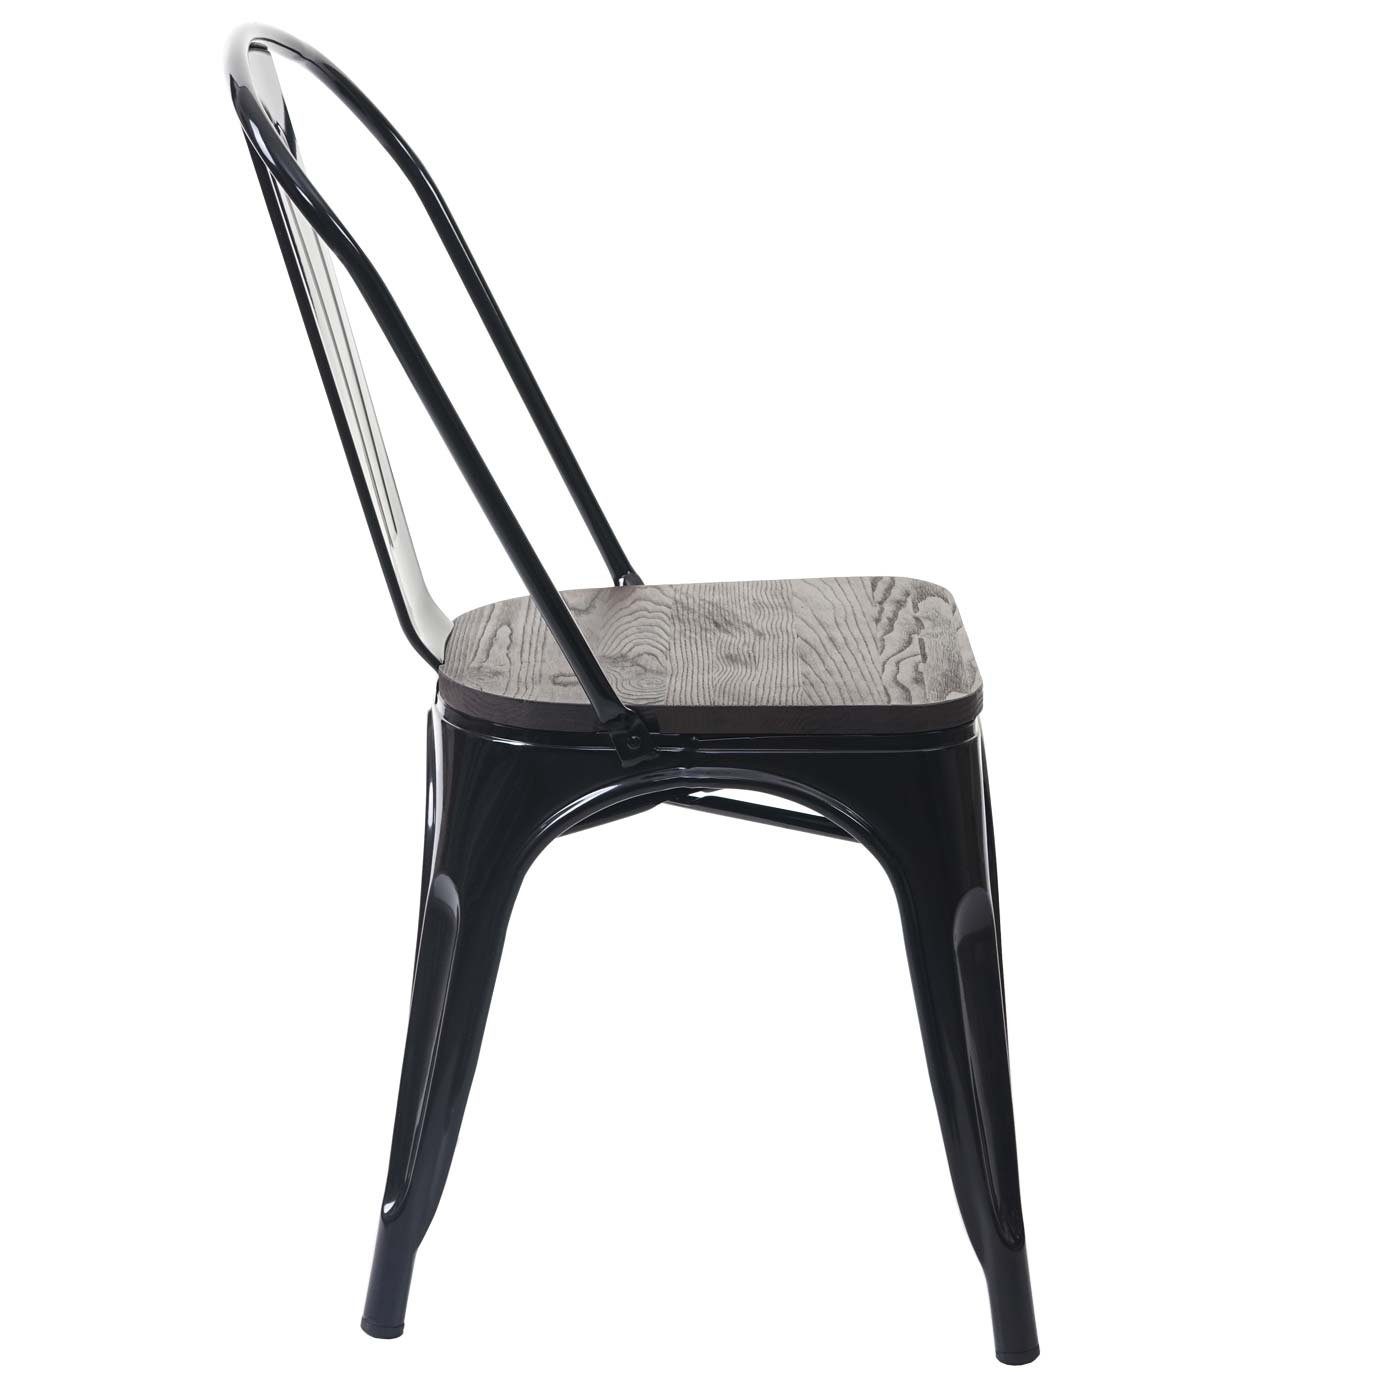 6er-Set, Maximale Holzsitzfläche, Bistrostuhl Stuhl: 120 Belastbarkeit pro 6 mit MCW-A73-Ho-6 schwarz St), kg (Set, MCW